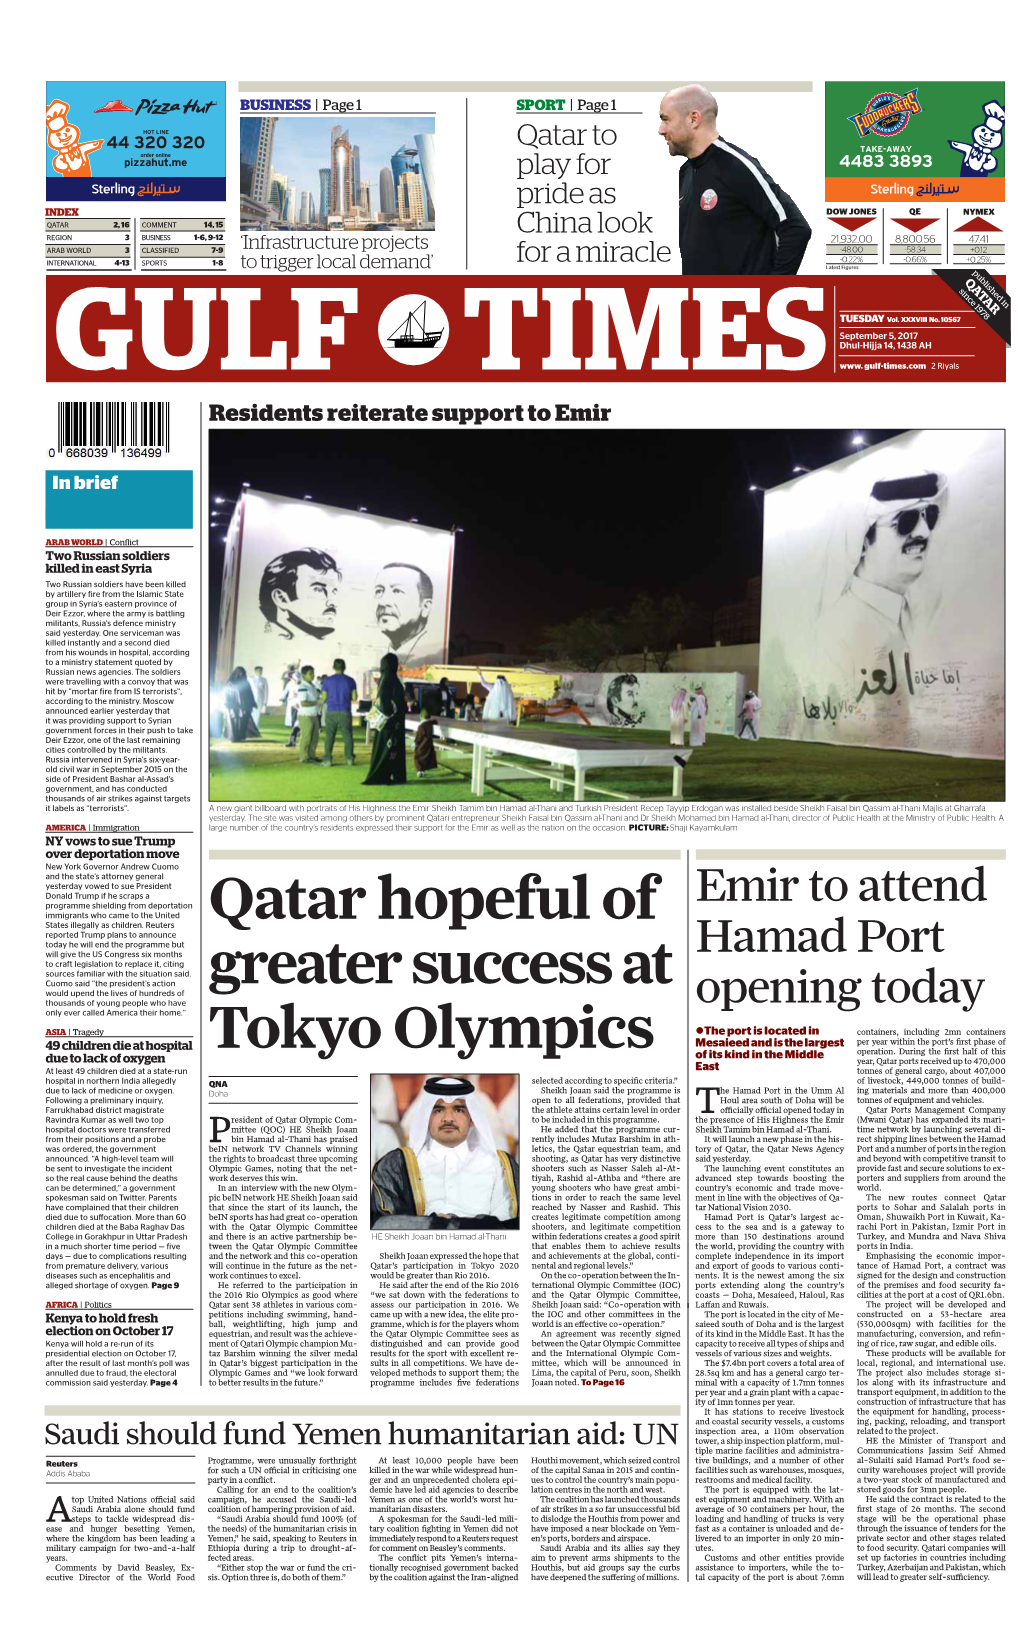 Qatar Hopeful of Greater Success at Tokyo Olympics